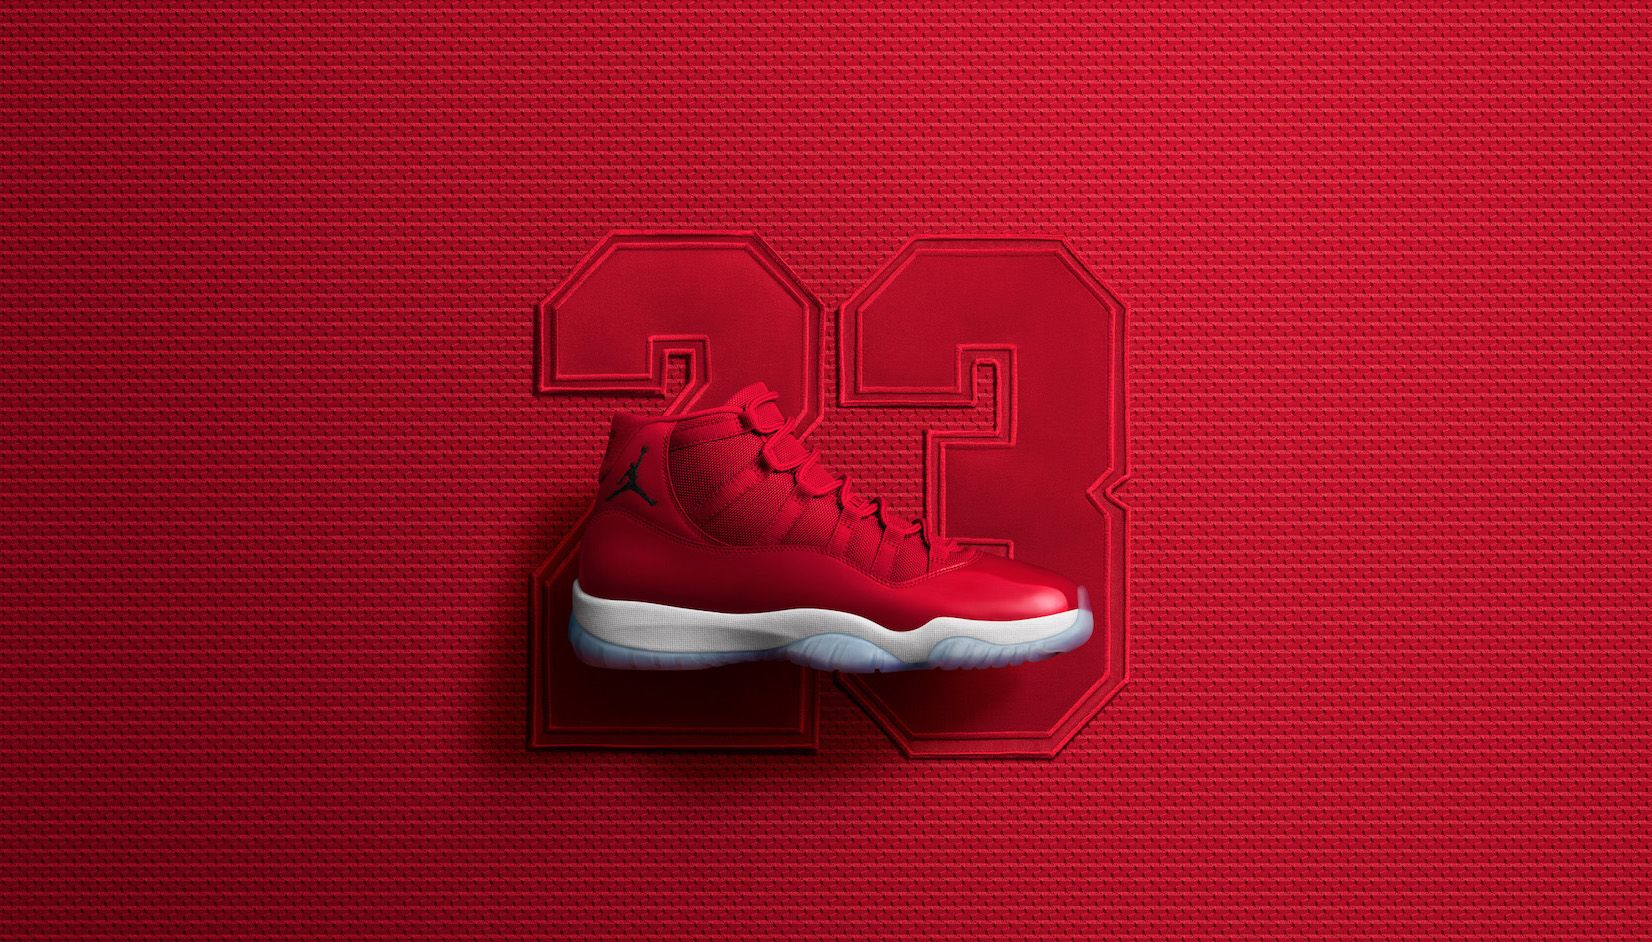 Jordan 11 Red Wallpapers on